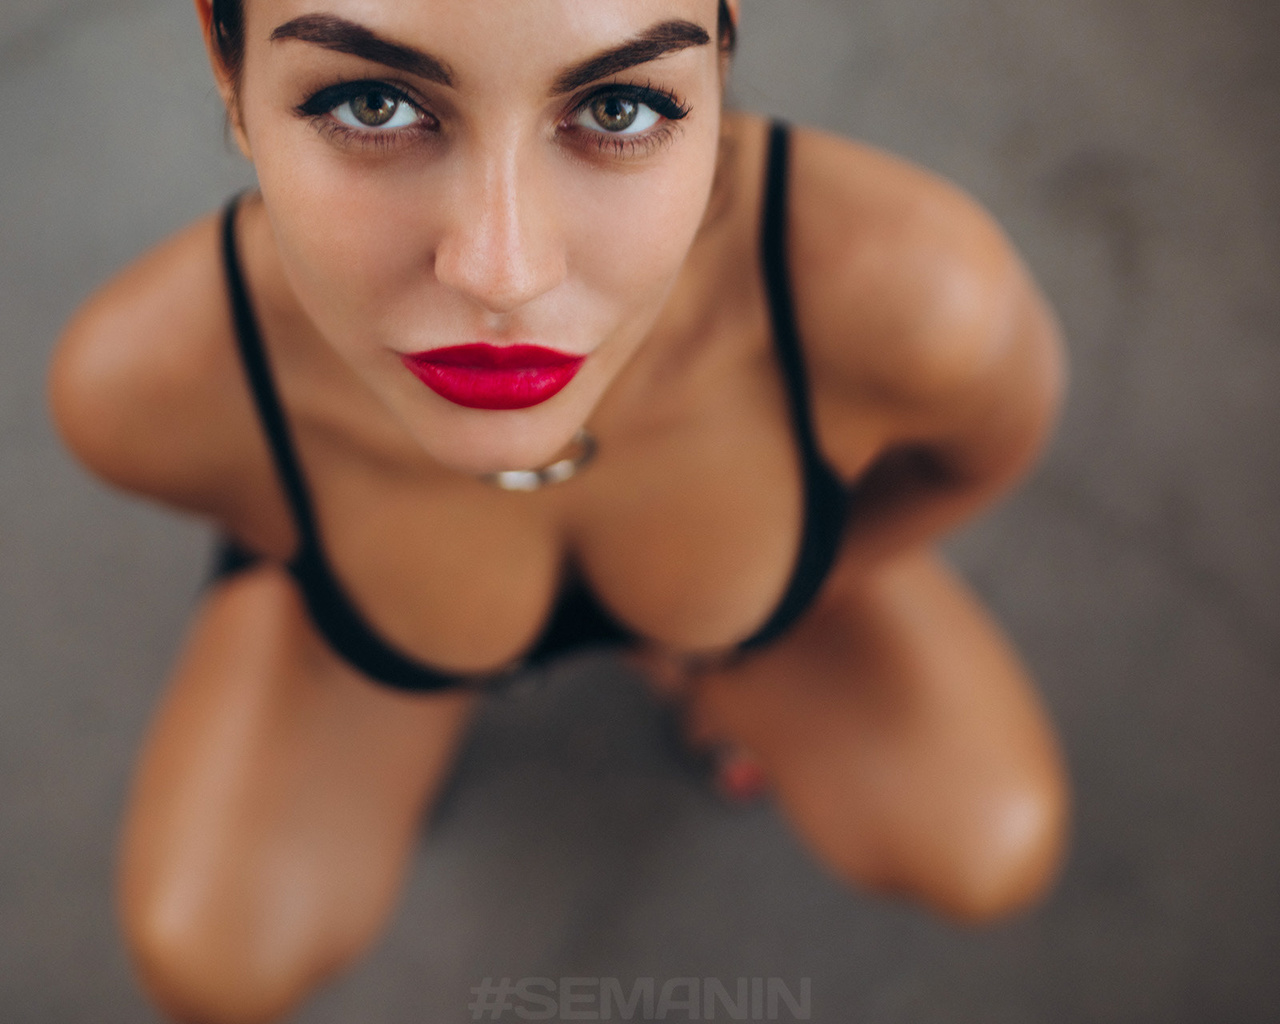 women, black dress, red lipstick, tight dress, squatting, face, aleksandr semanin